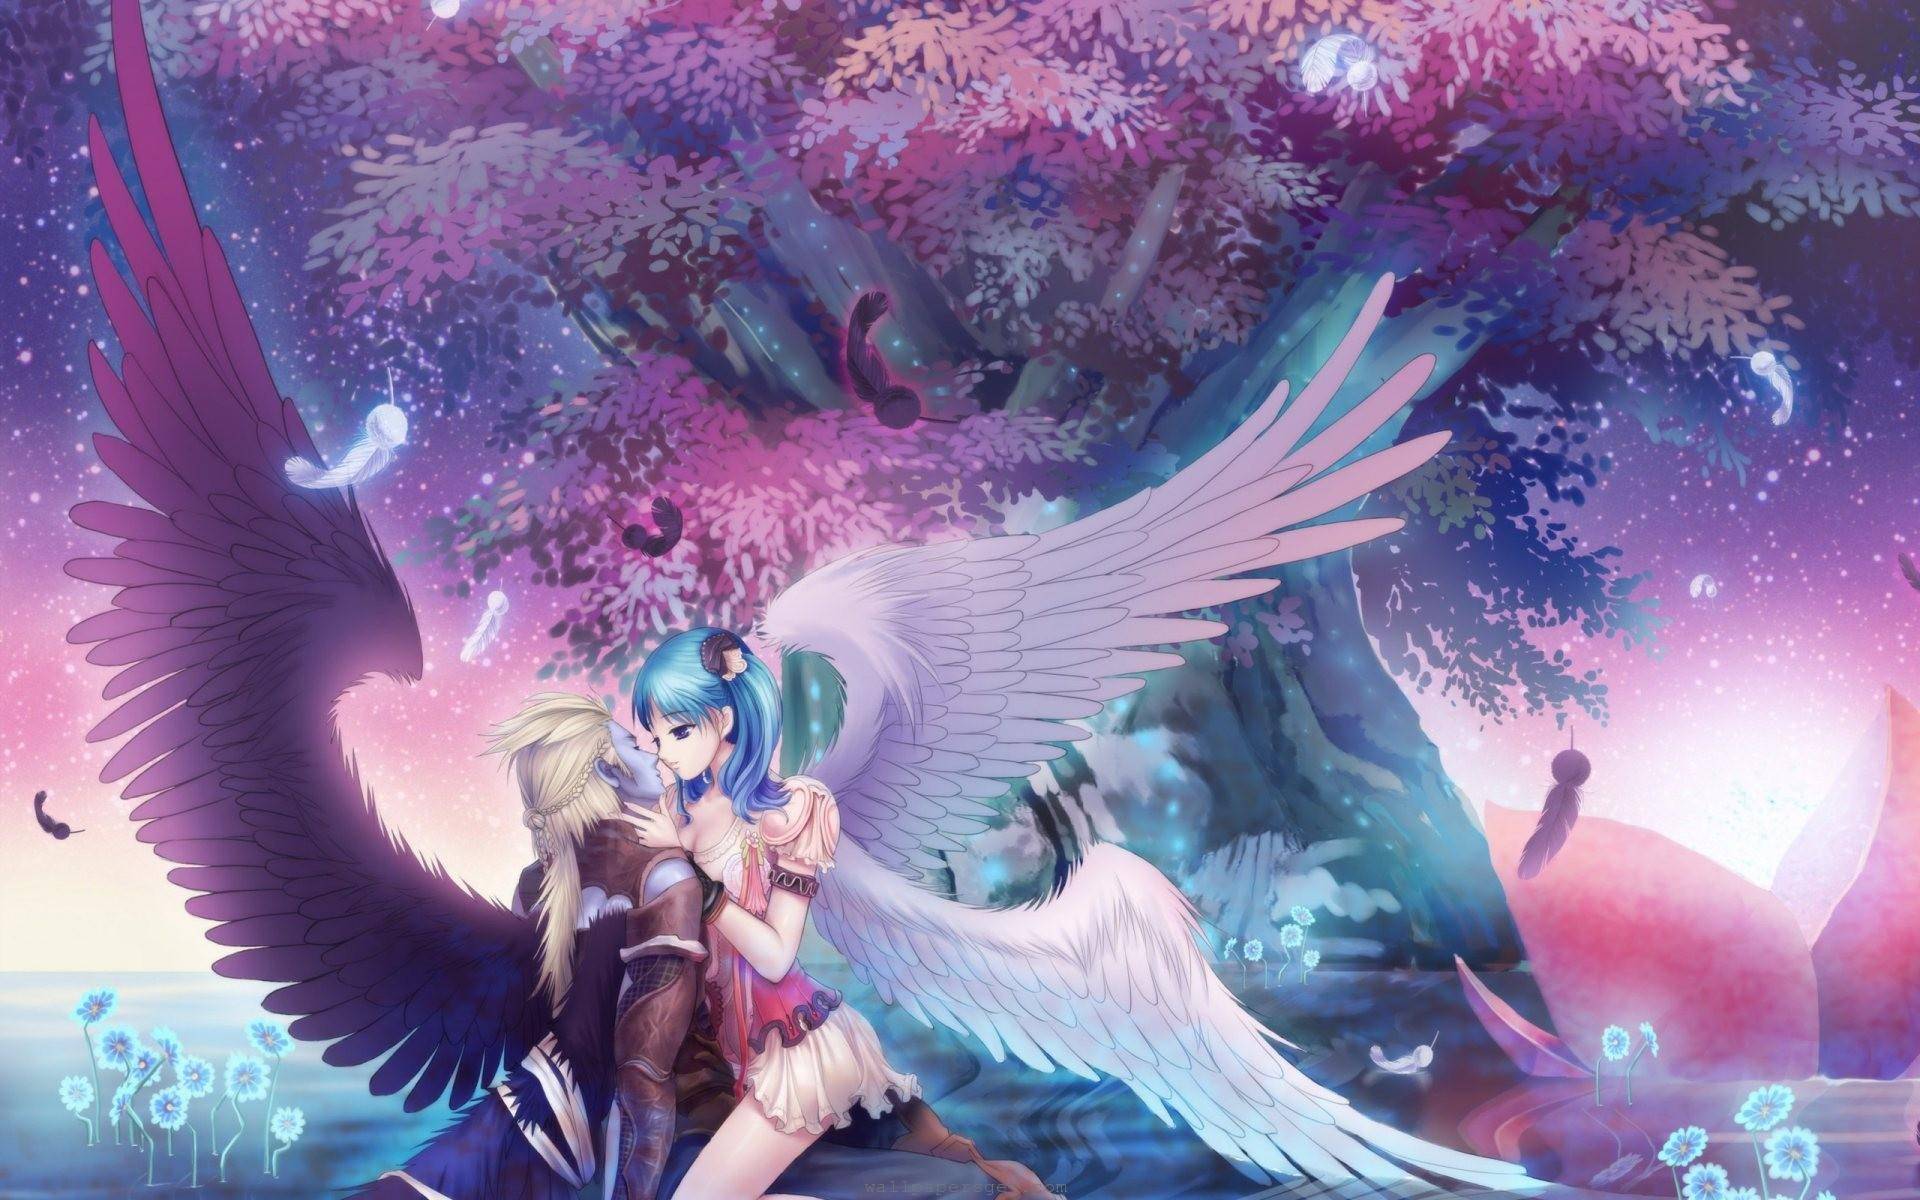 Angel - Cute Anime Girls Wallpapers and Images - Desktop Nexus Groups